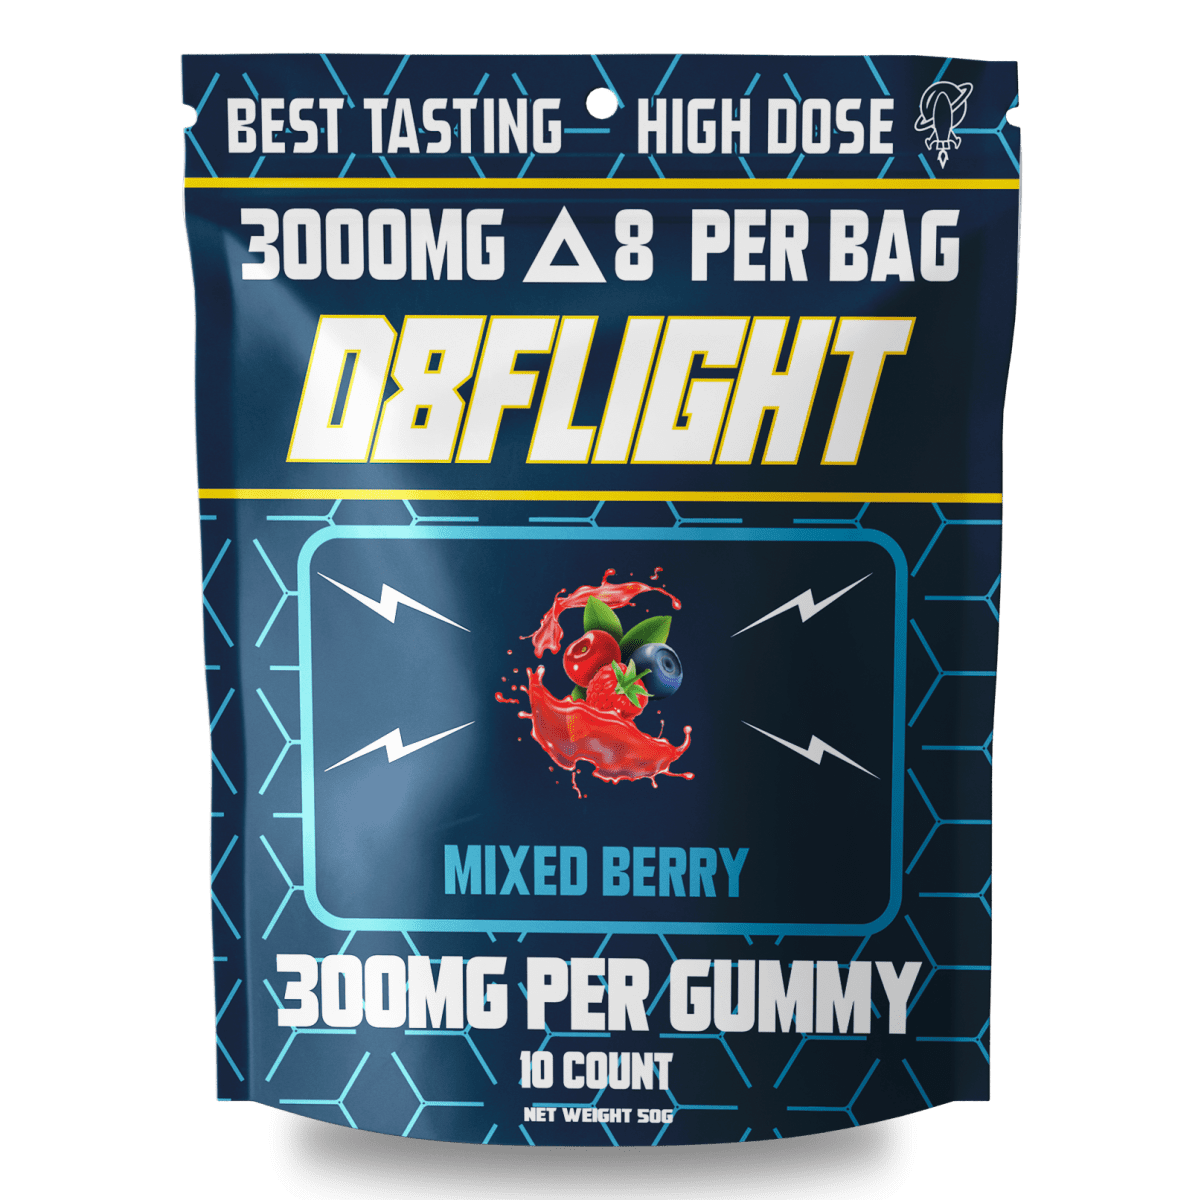 High dose 3000mg d8 gummies mixed berry